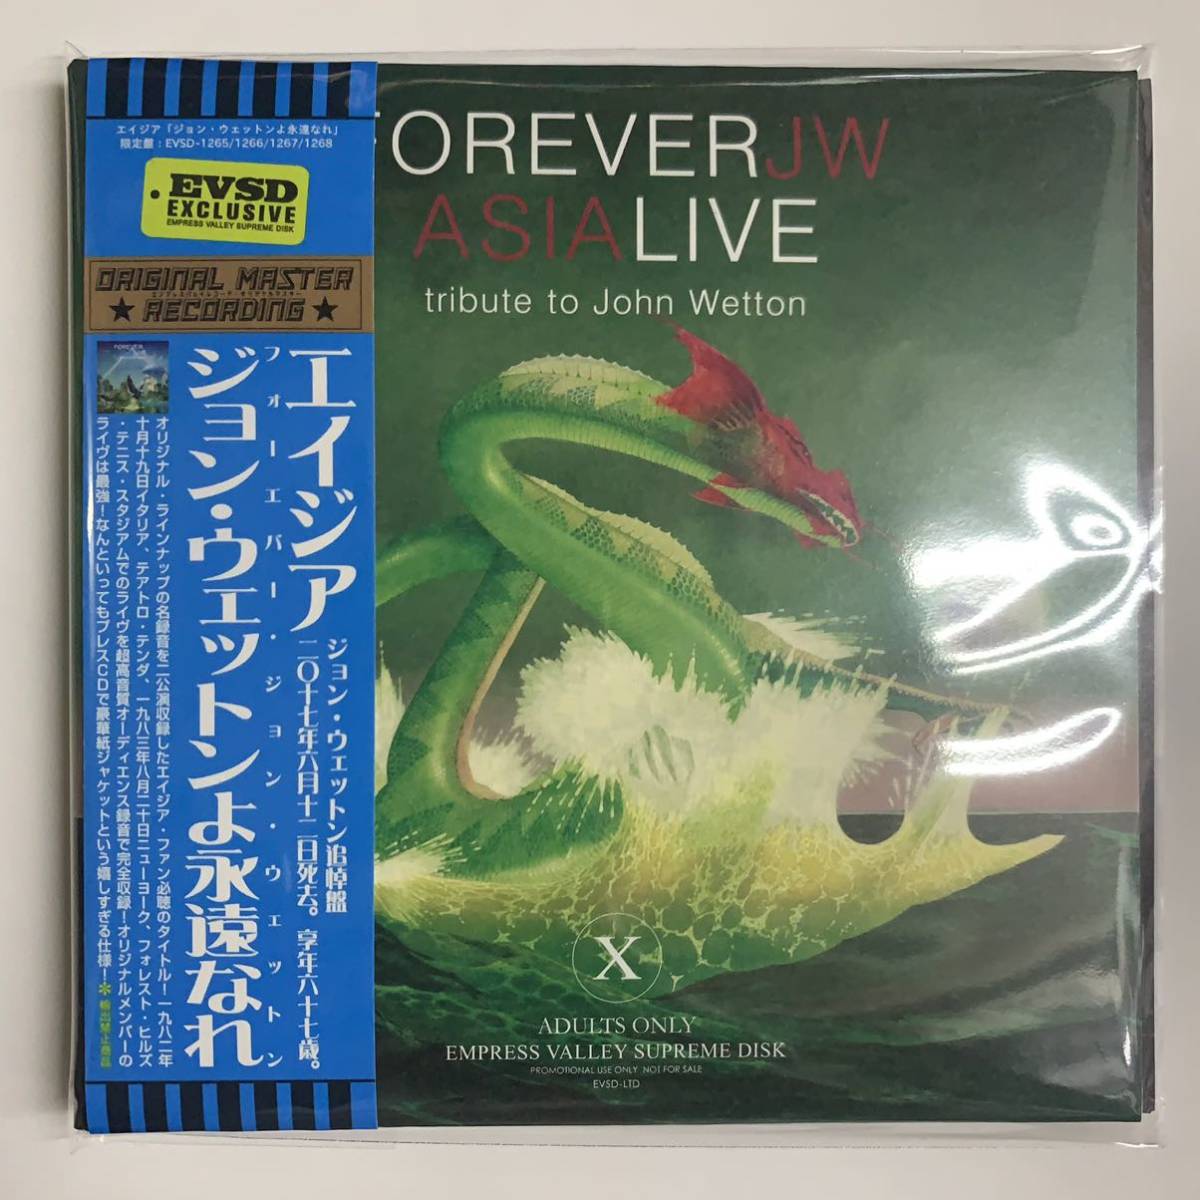 ASIA : FOREVER JW Asia Live「ジョン・ウェットンよ永遠なれ」 4CD set Empress Valley 異なるデザインで再登場です！！マスト！！_画像1